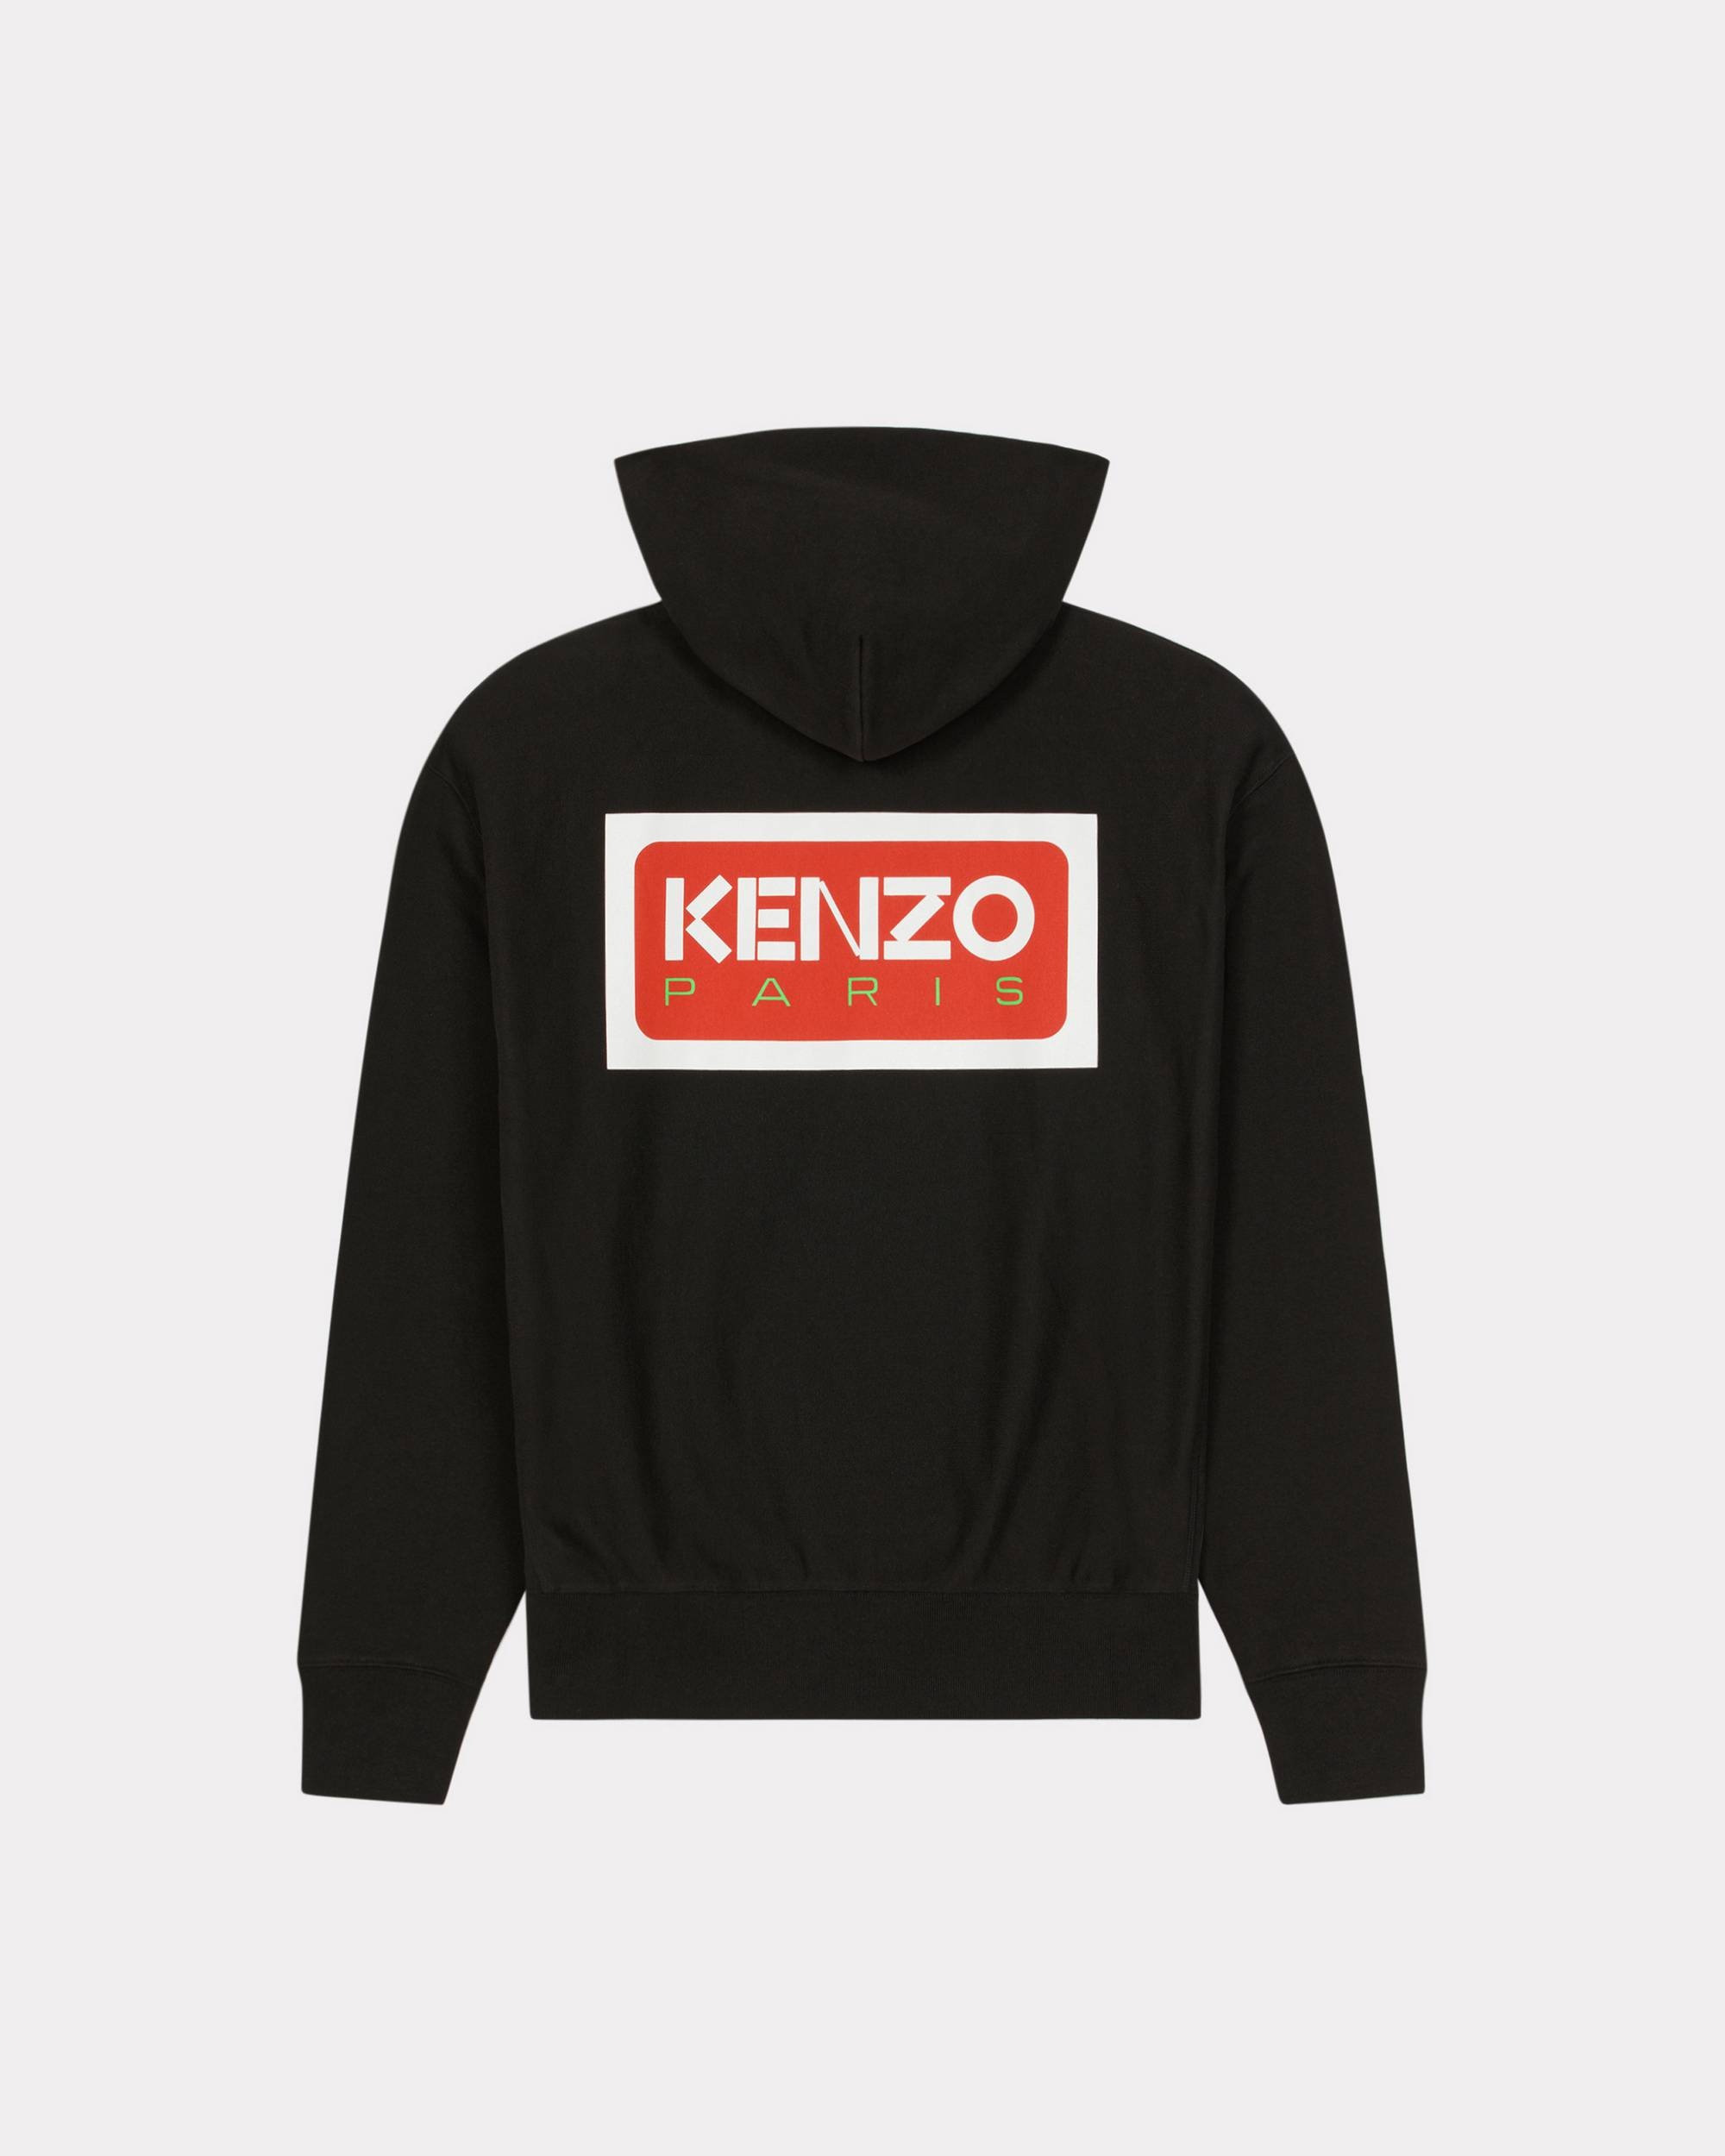 Oversize hooded KENZO Paris sweatshirt - 2